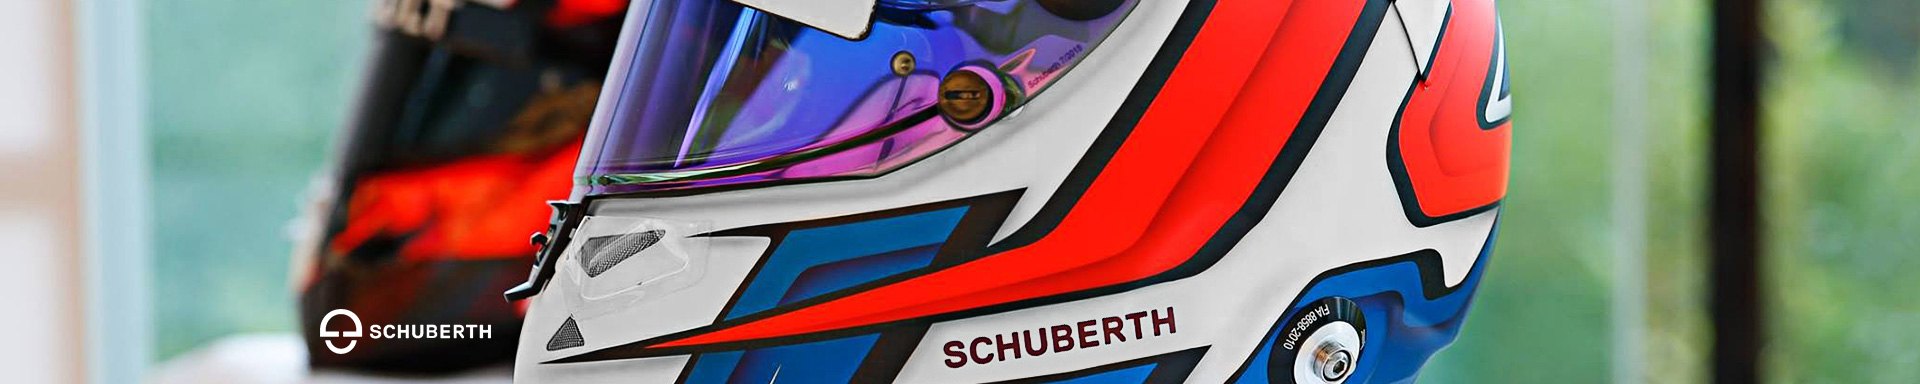 Schuberth Motorcycle Communication